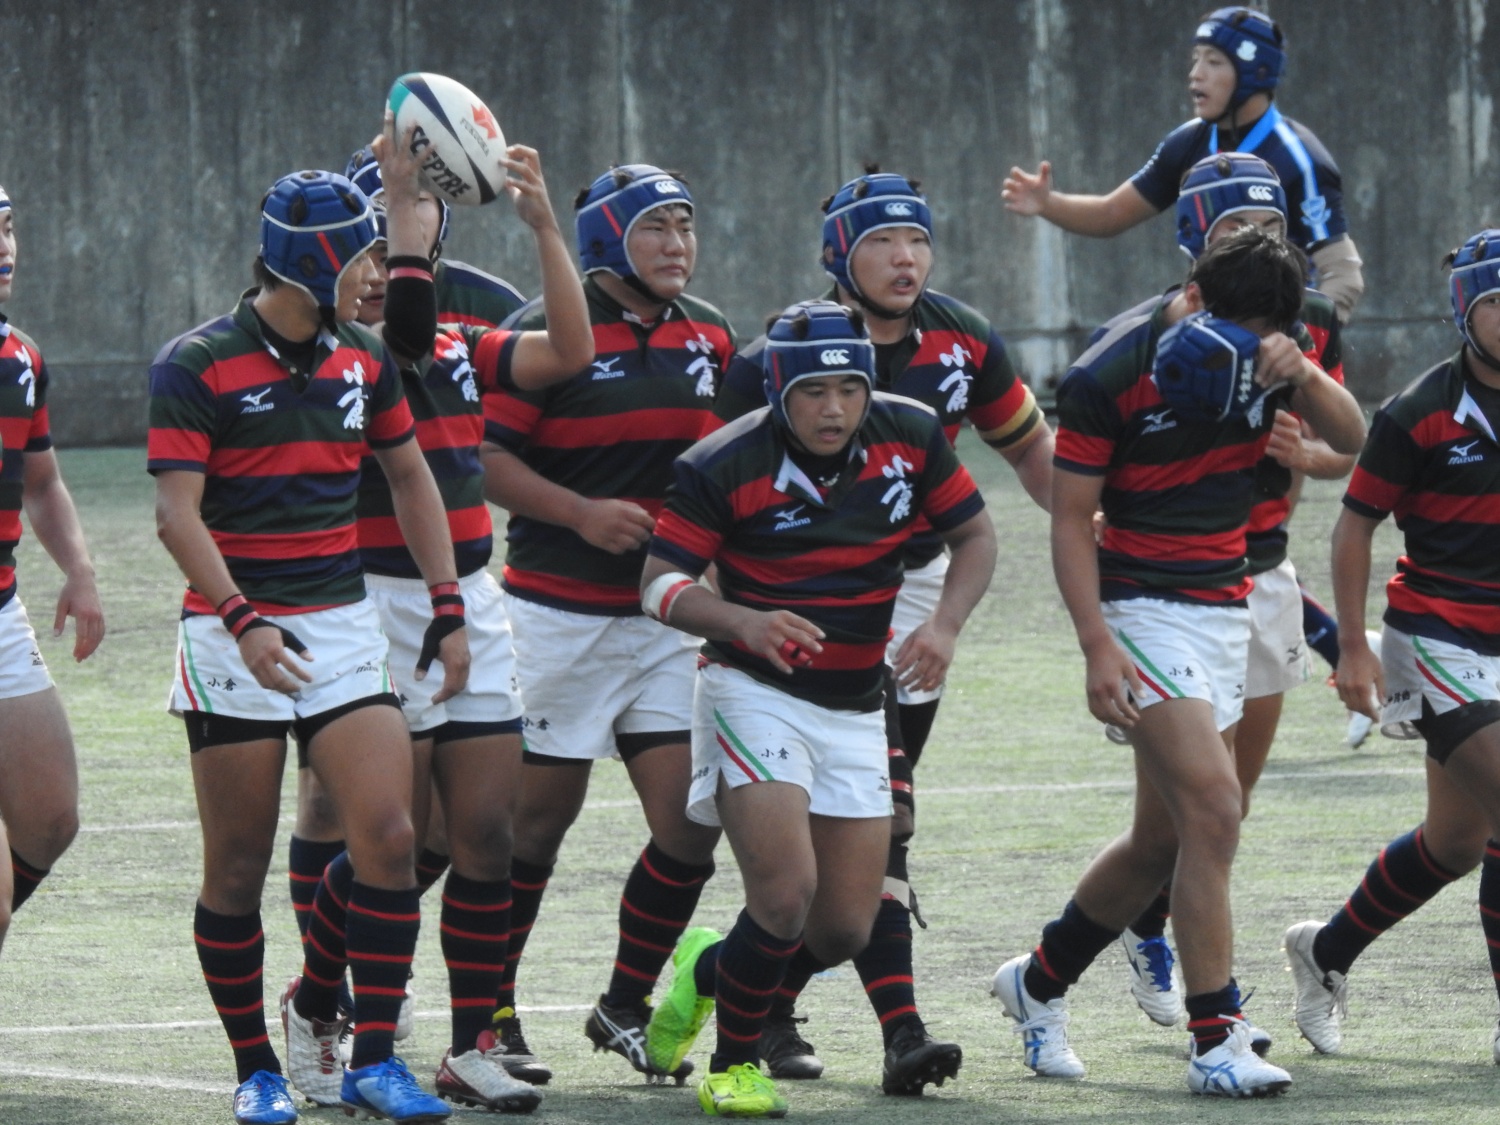 http://kokura-rugby.sakura.ne.jp/DSCN8457_xlarge.JPG